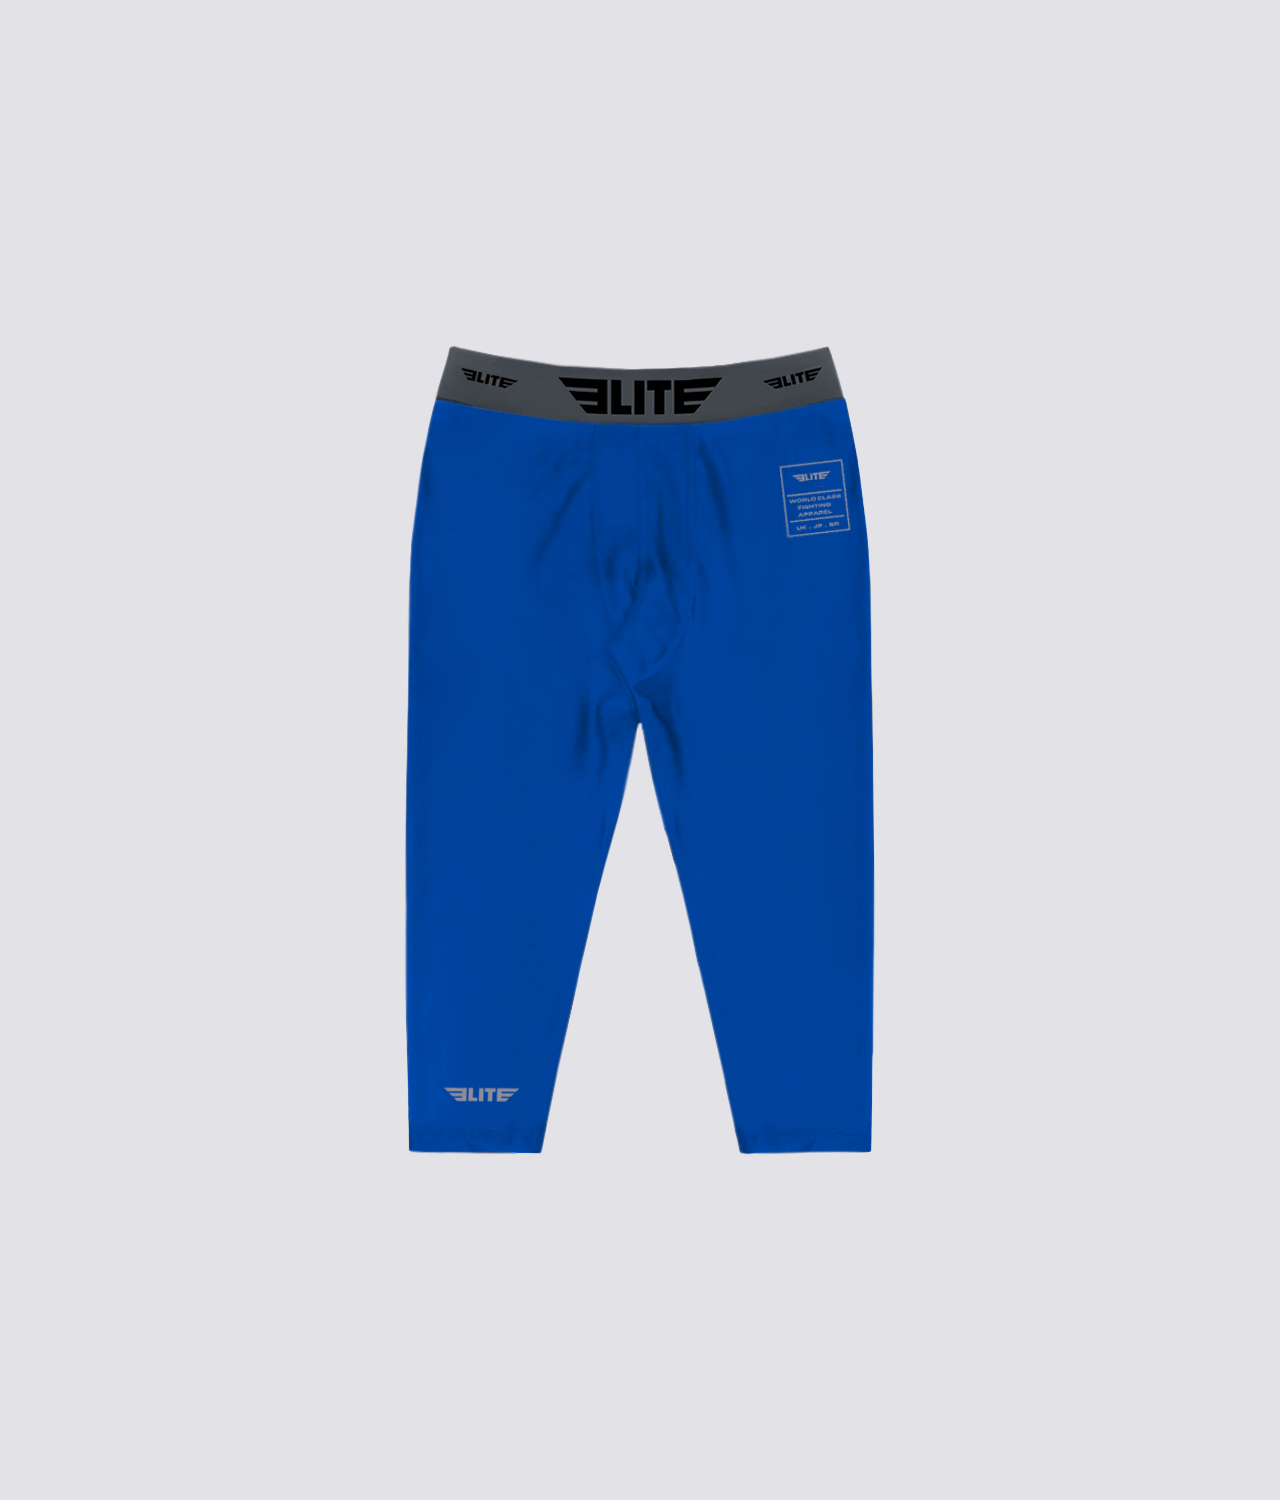 Men's Three Quarter Blue Compression Training Spat Pants